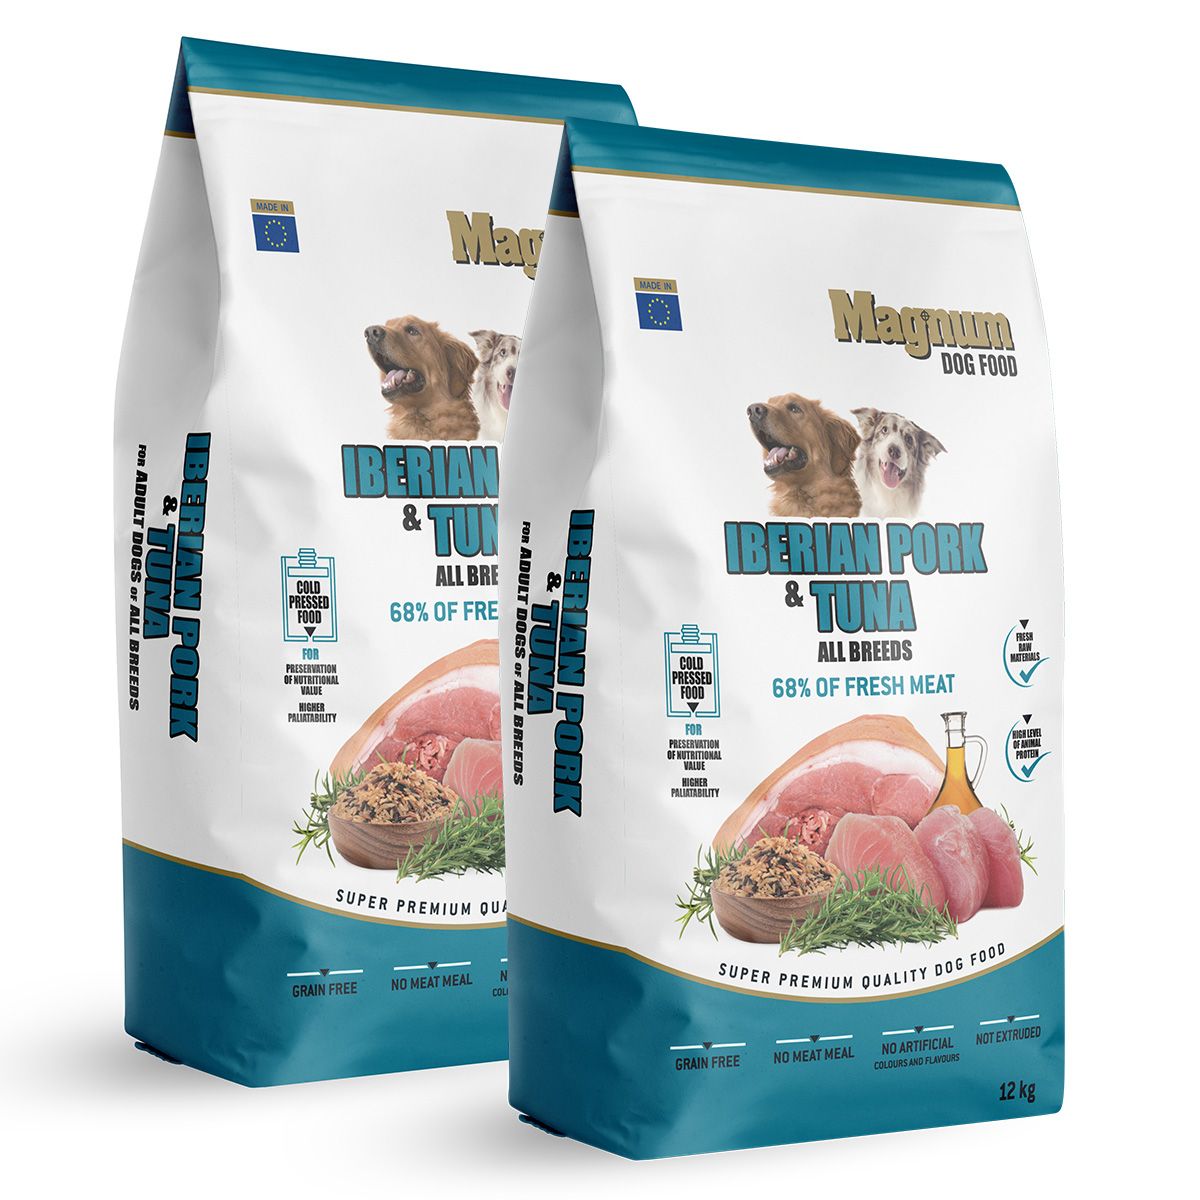 Magnum Iberian Pork & Tuna All Breed 24kg Magnum dog food